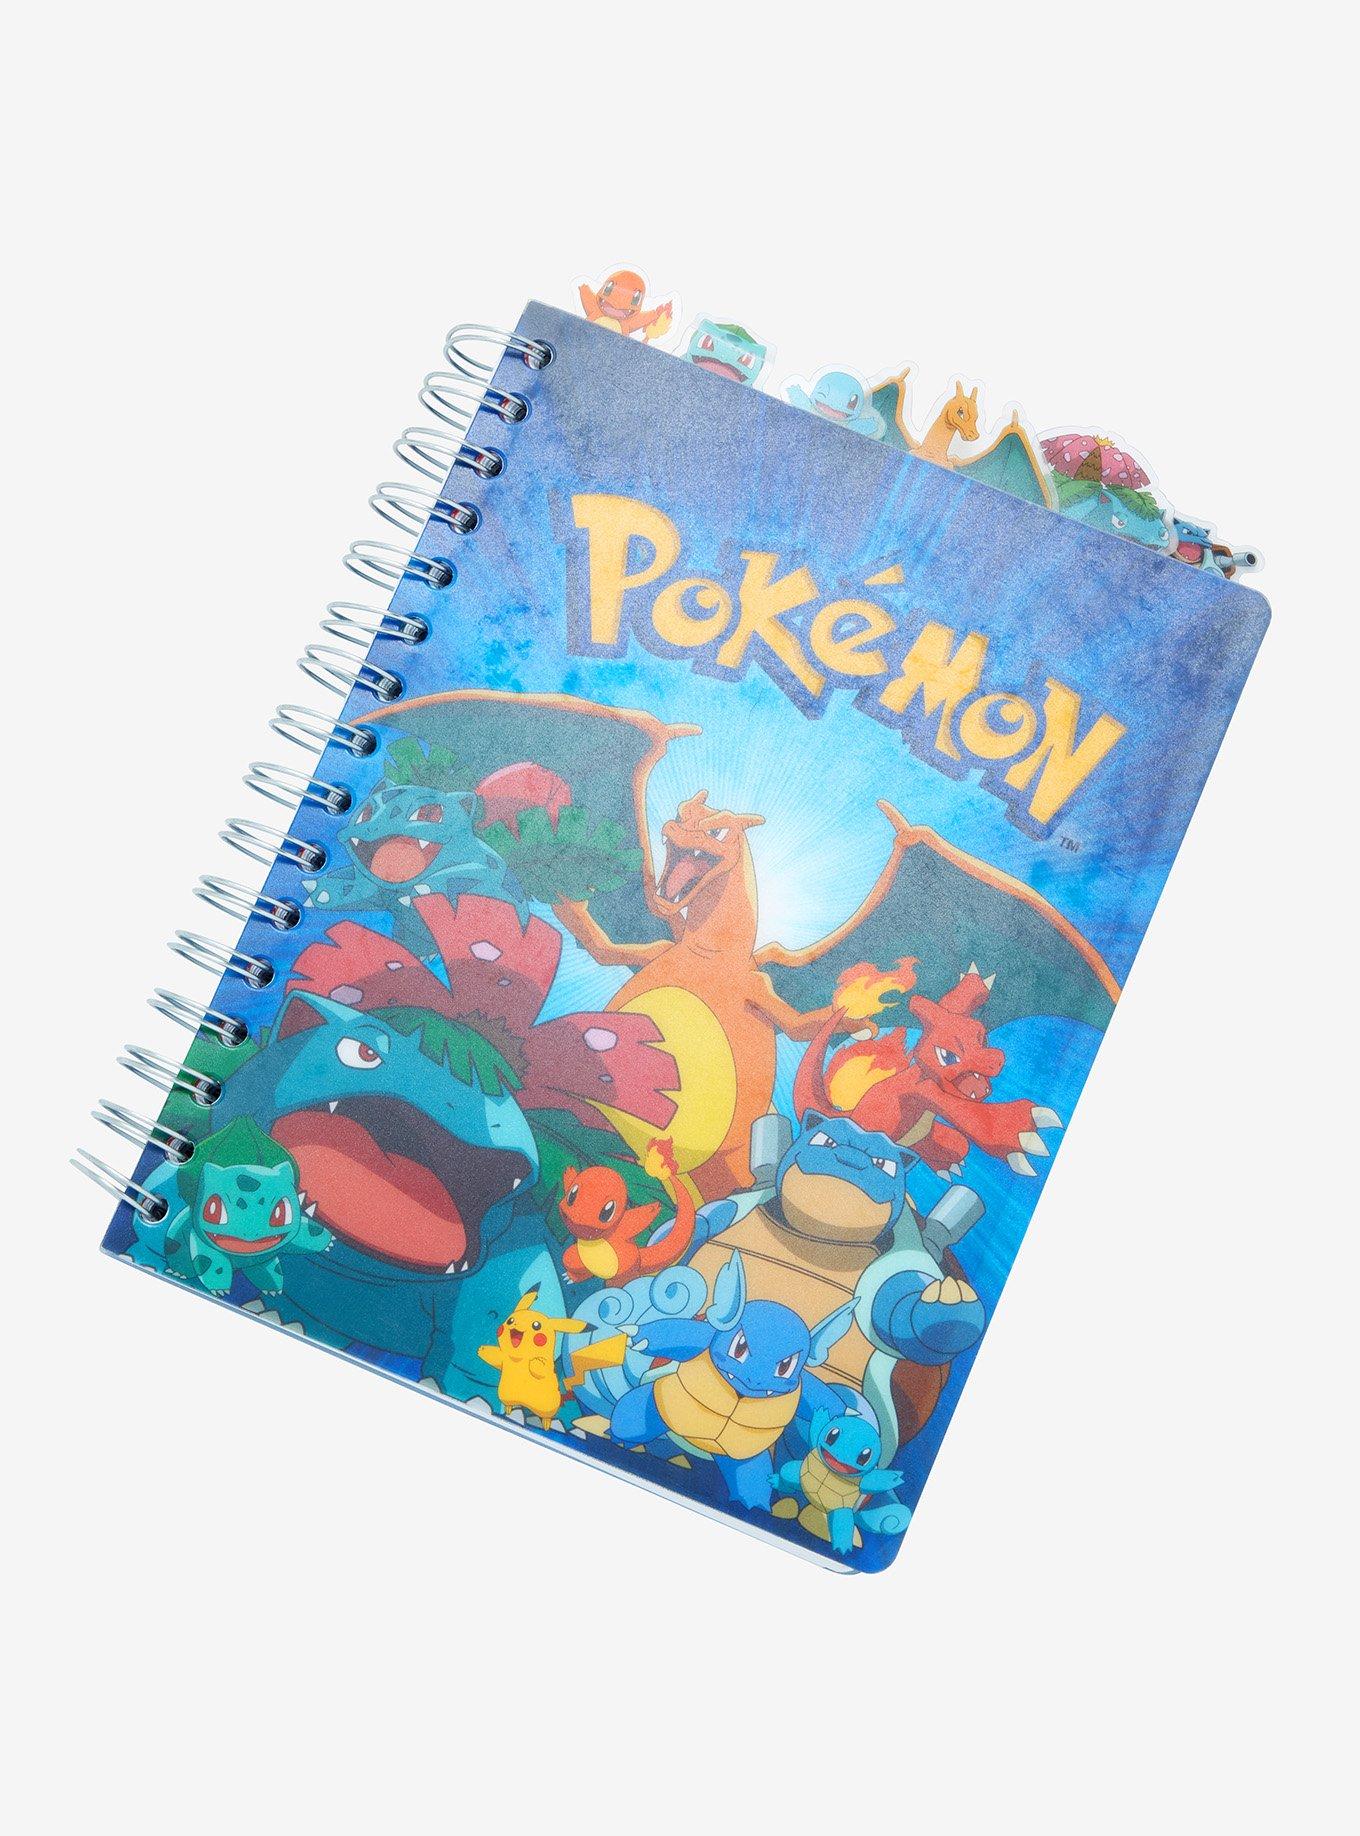 Pokémon Kanto Starters Evolutions Tab Journal 